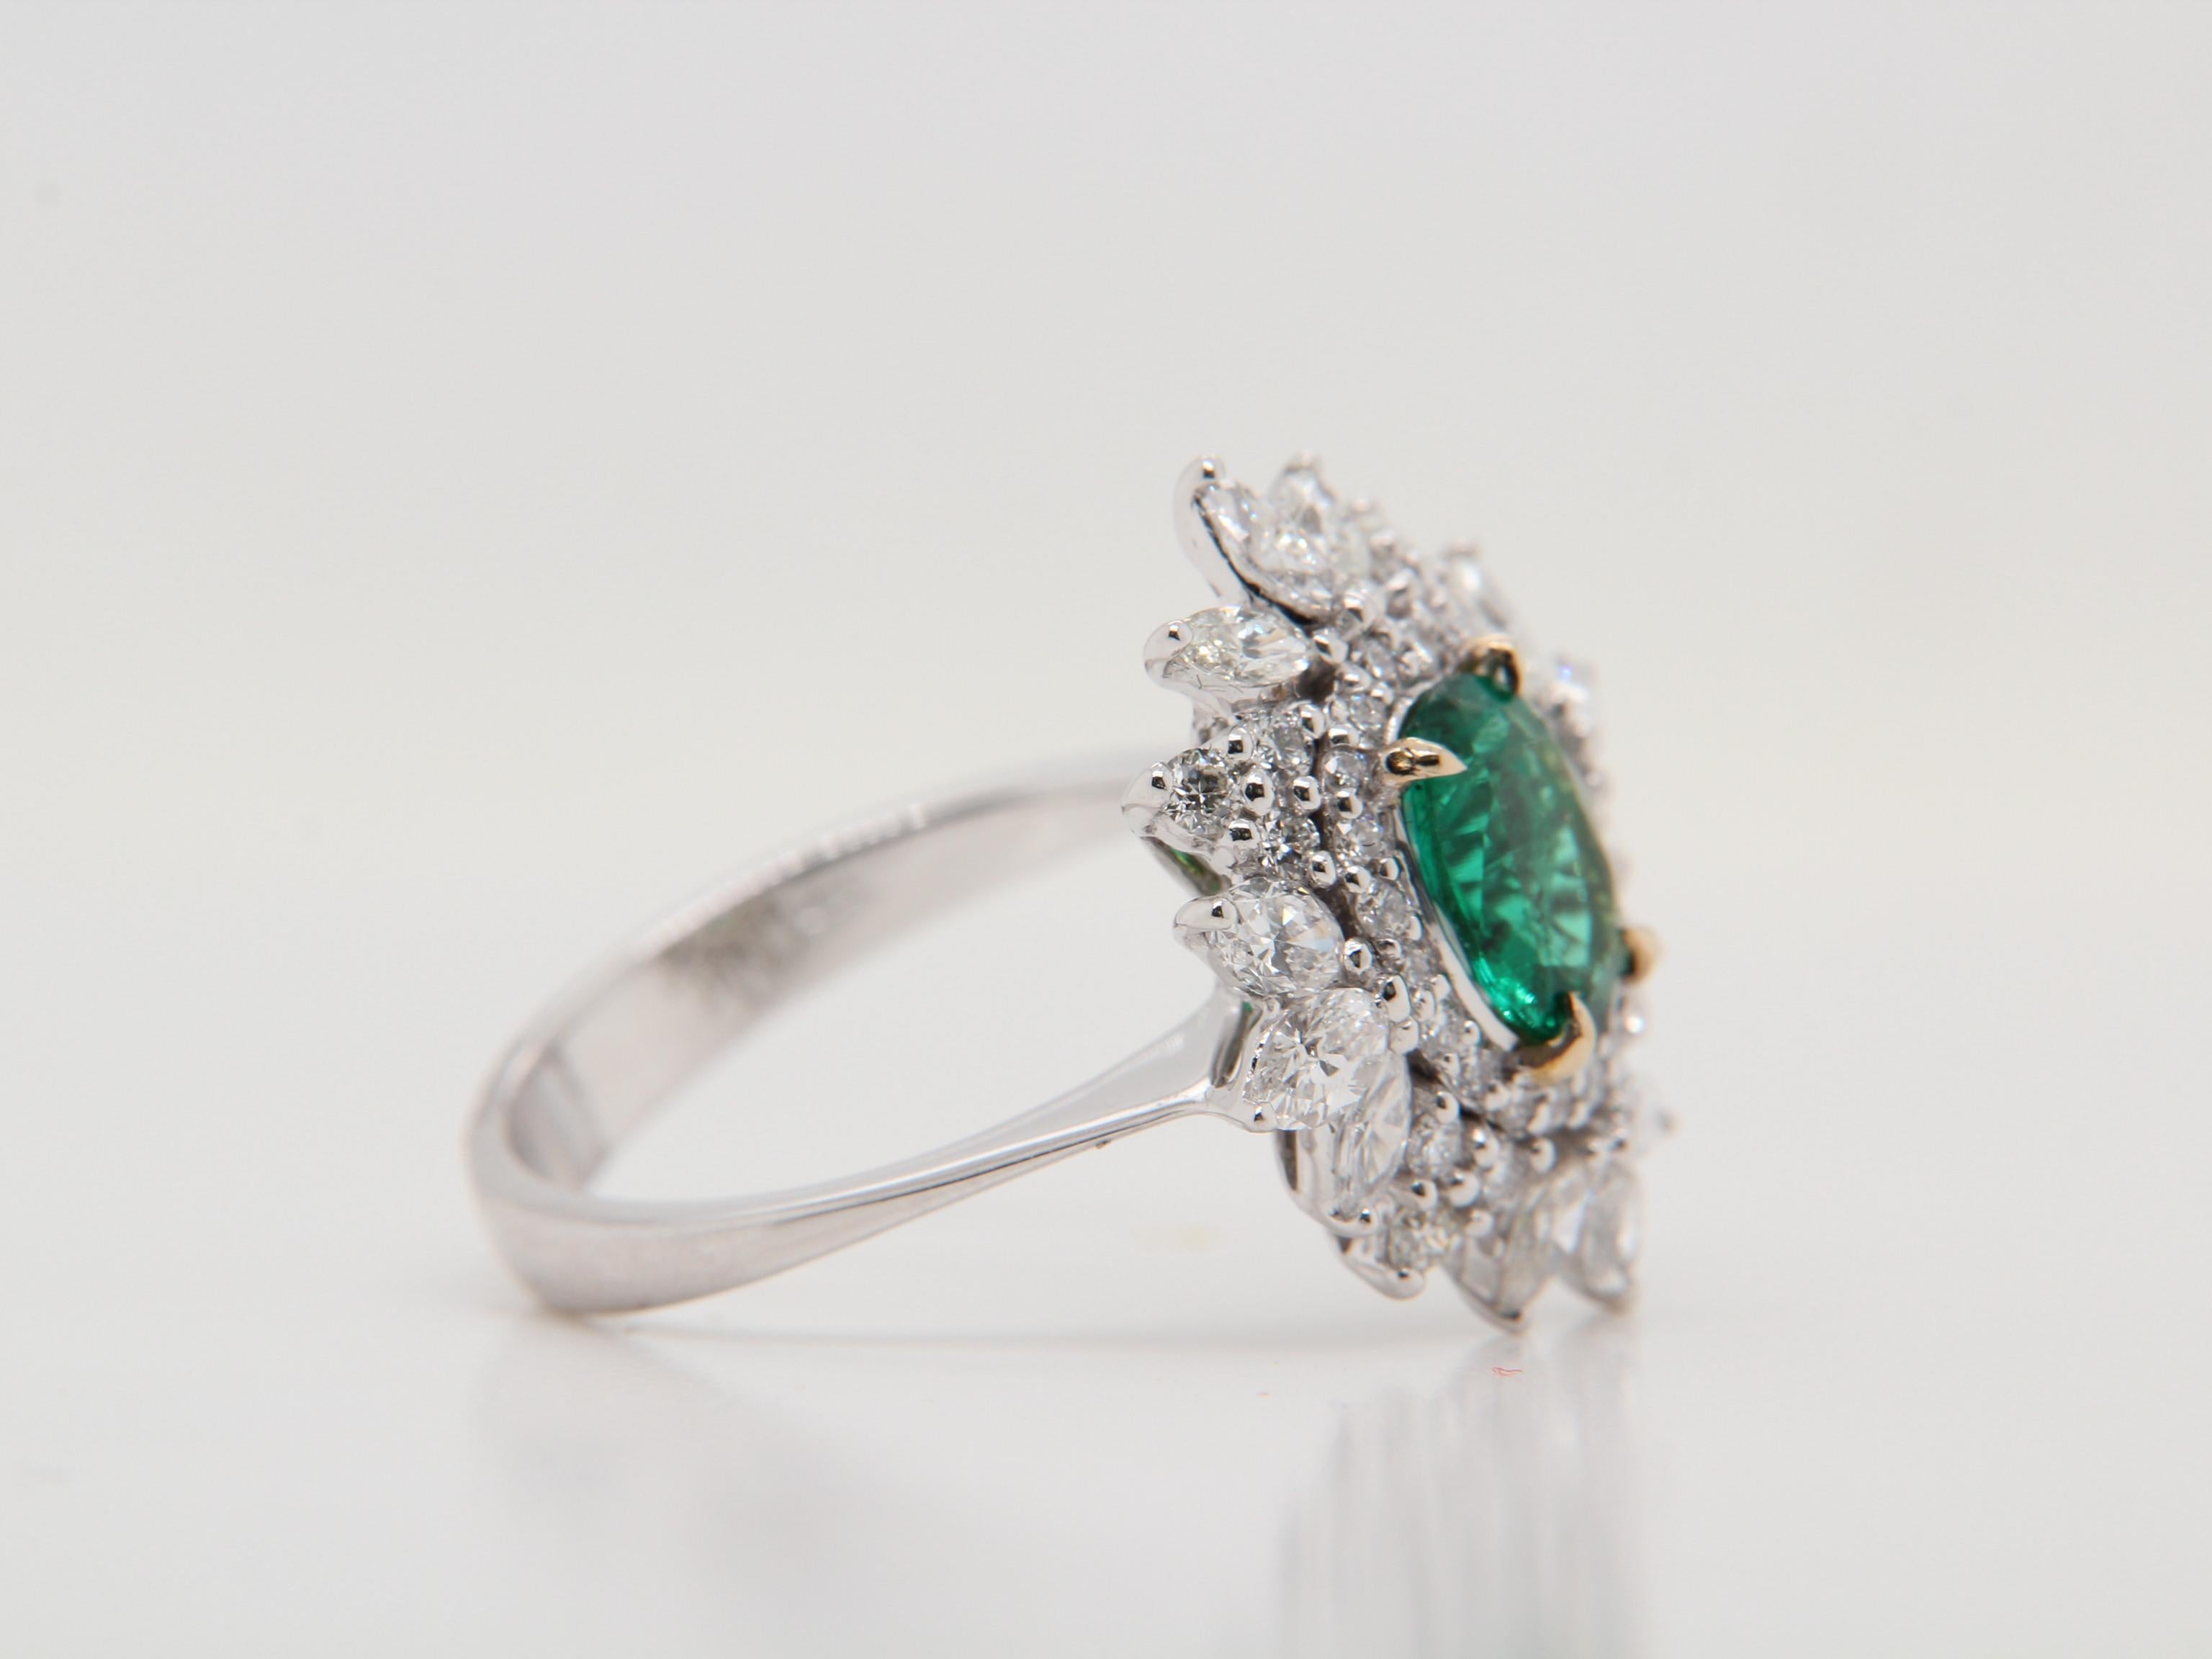 Oval Cut 1.01 Carat Emerald And Diamond Ring